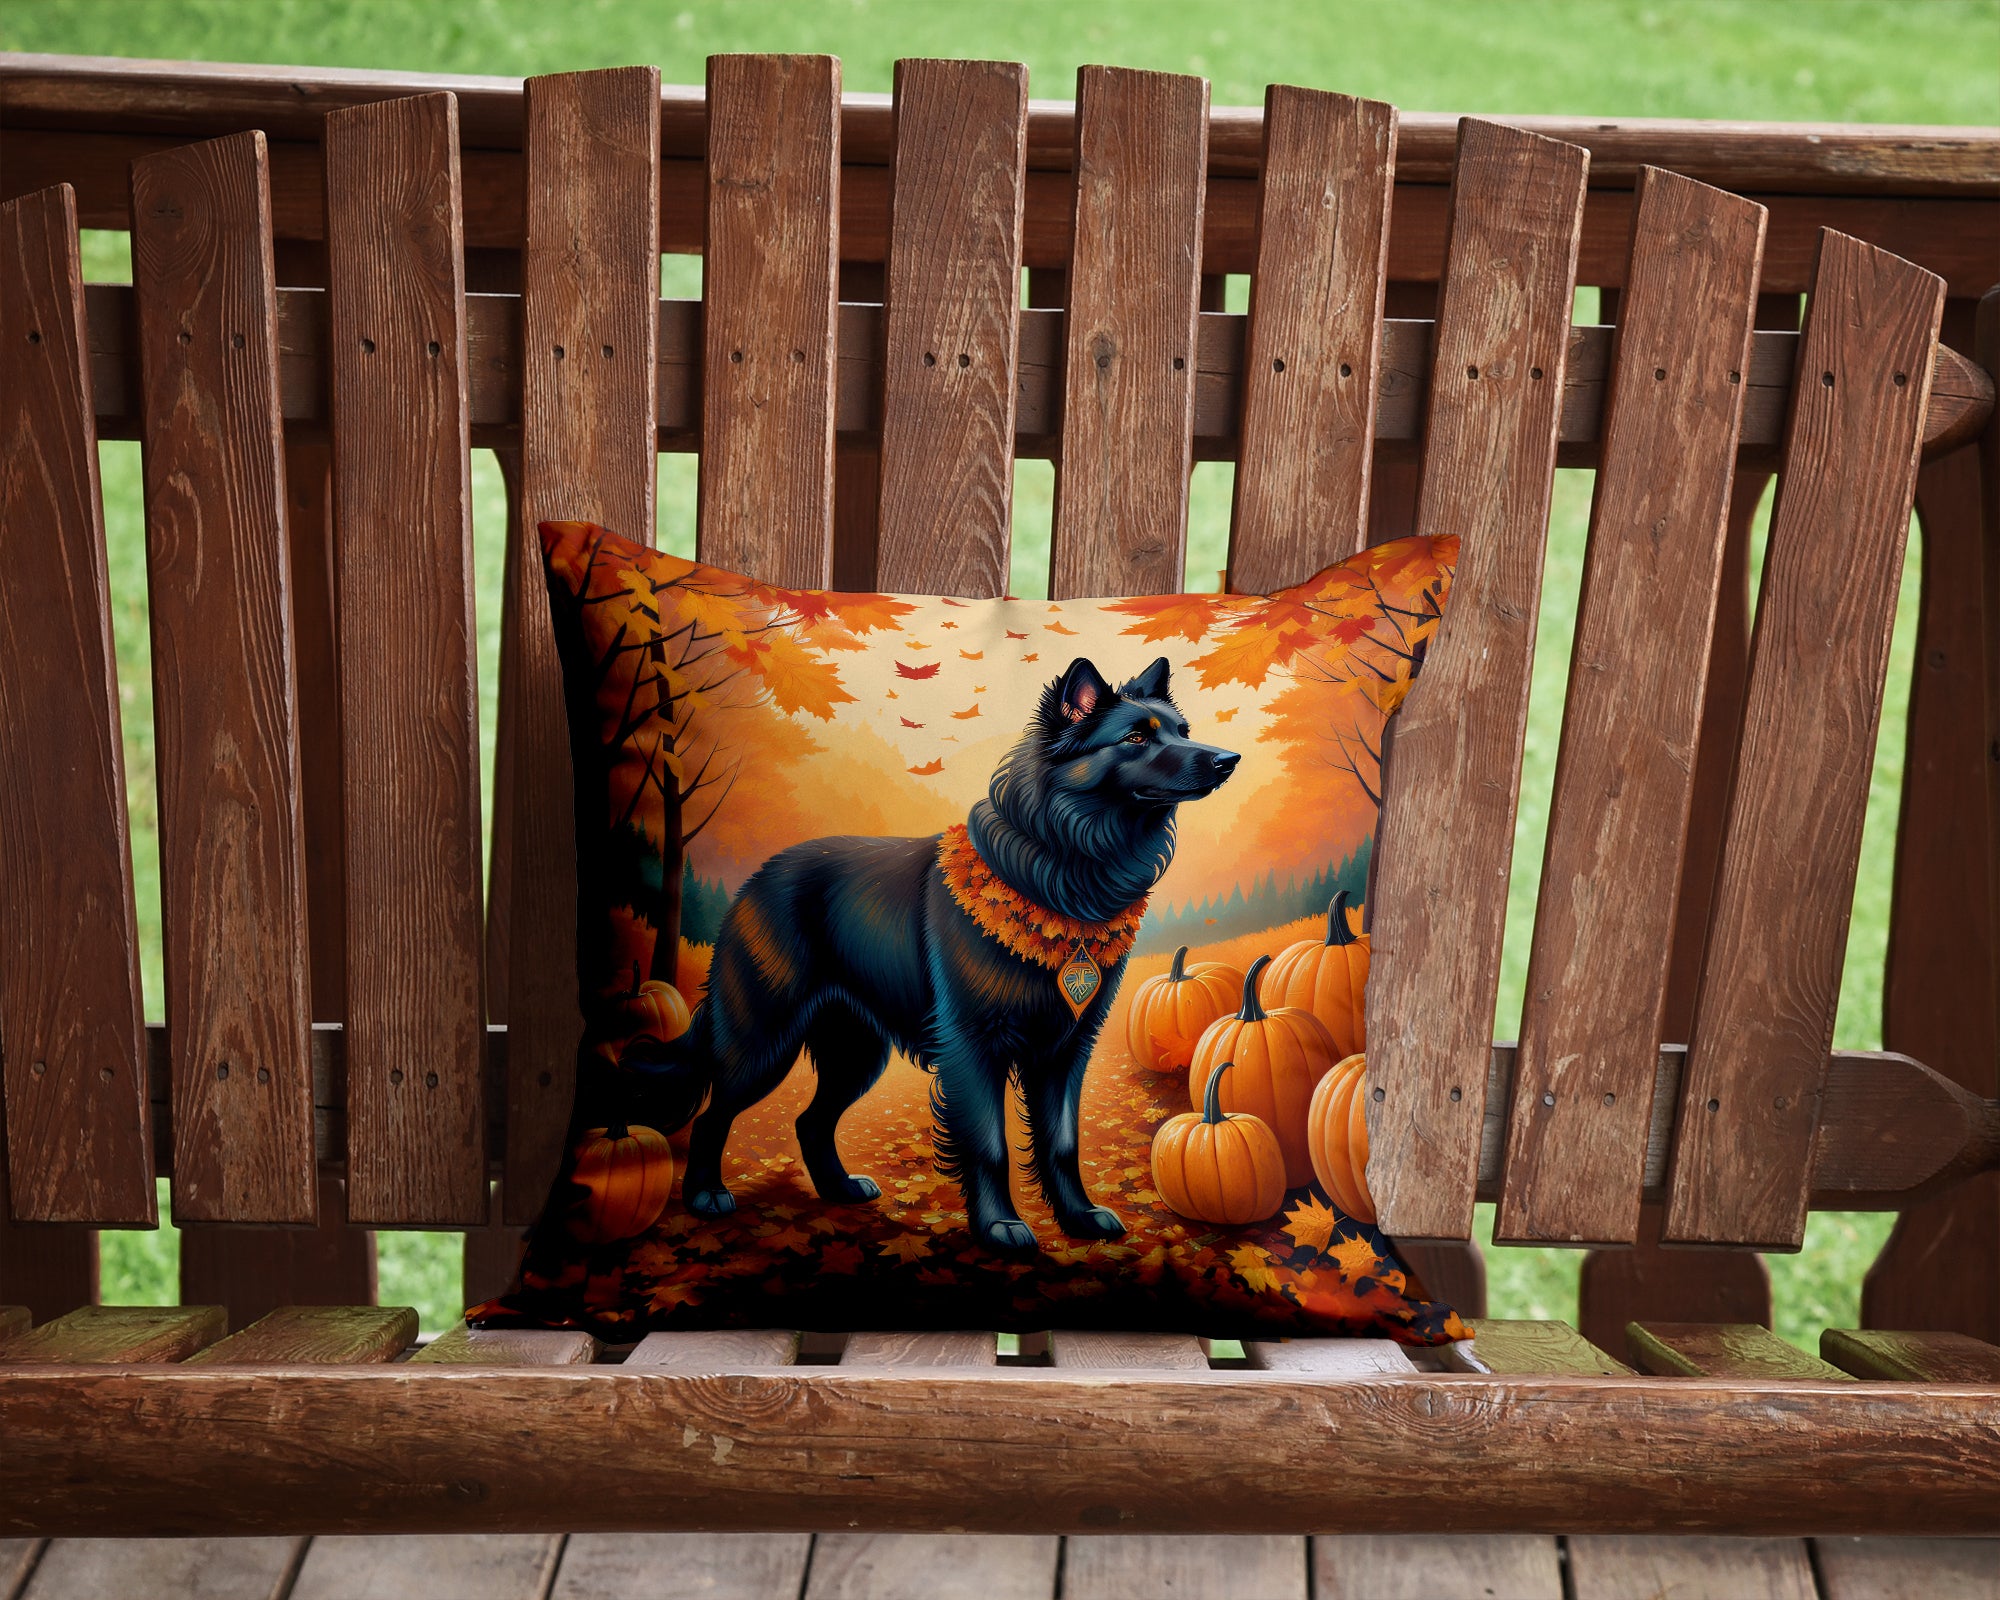 Buy this Belgian Sheepdog Fall Fabric Decorative Pillow